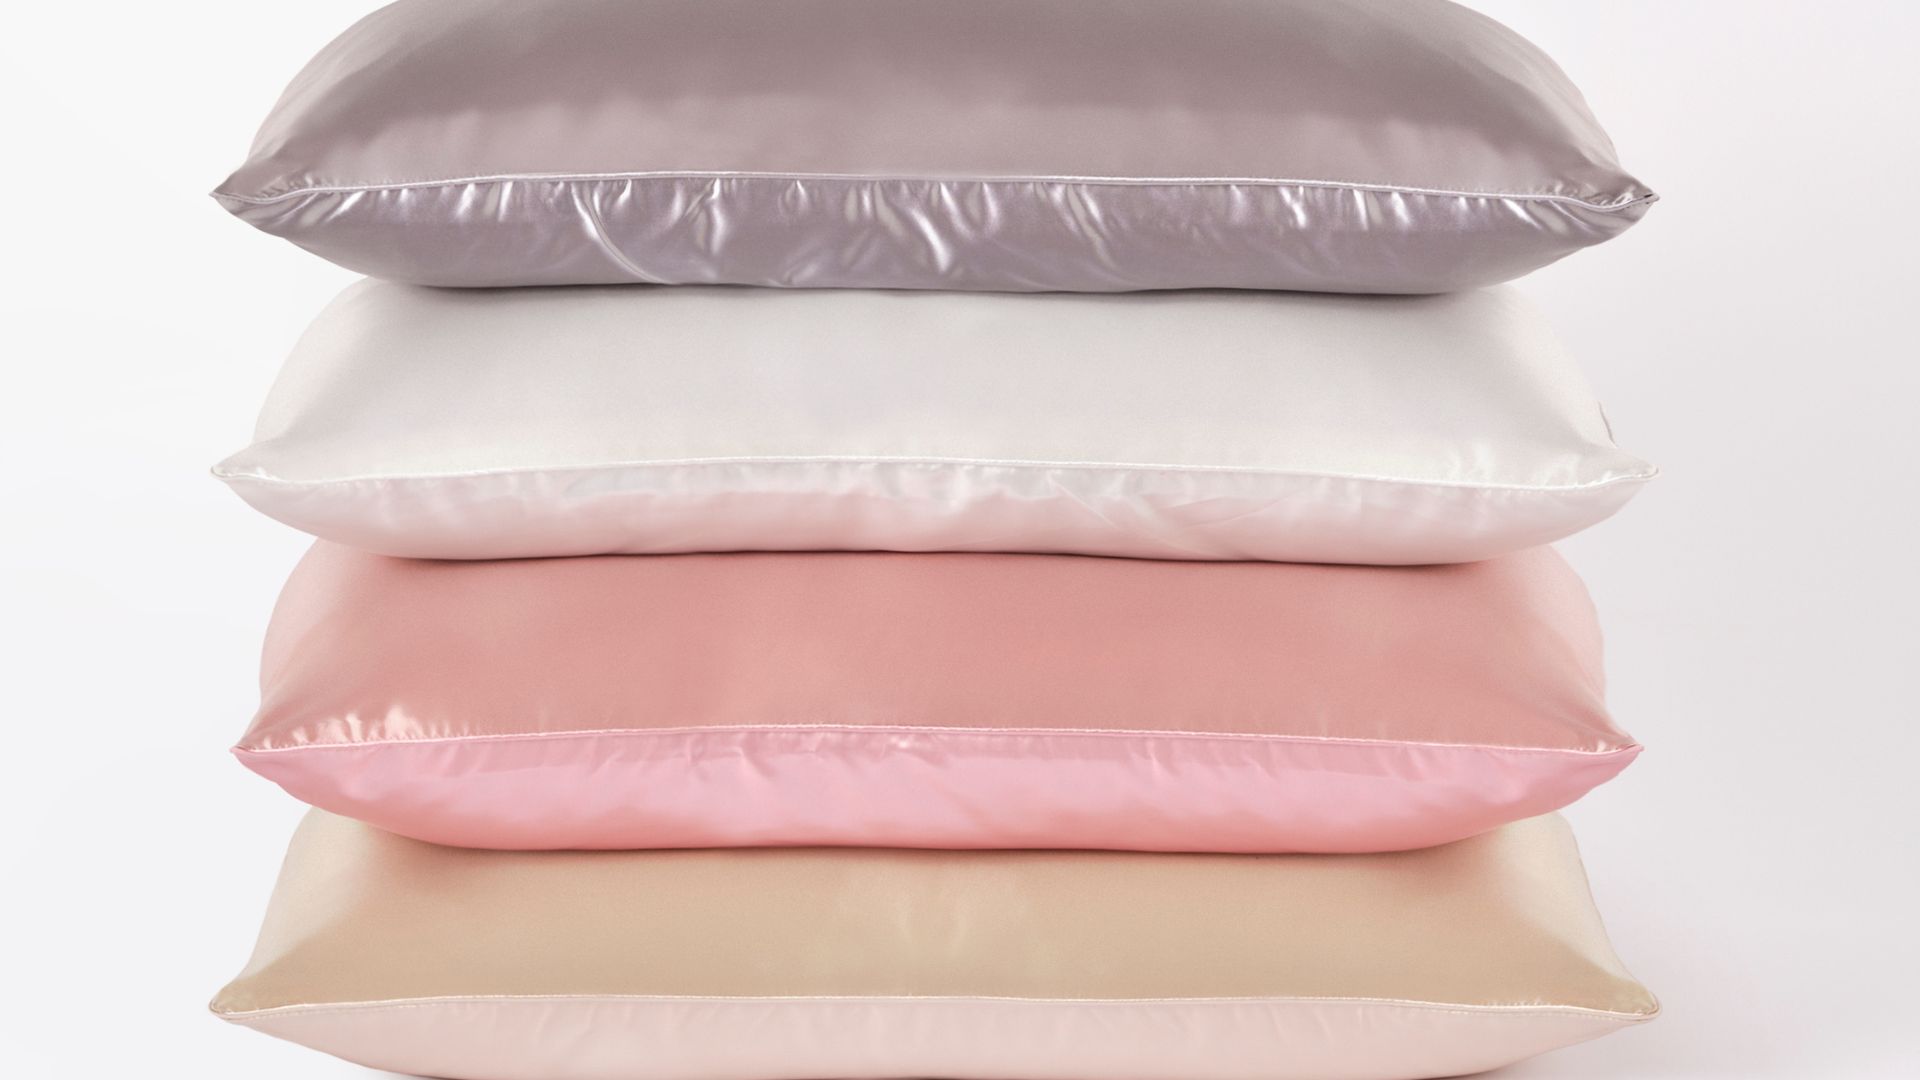 Pillowcase Materials